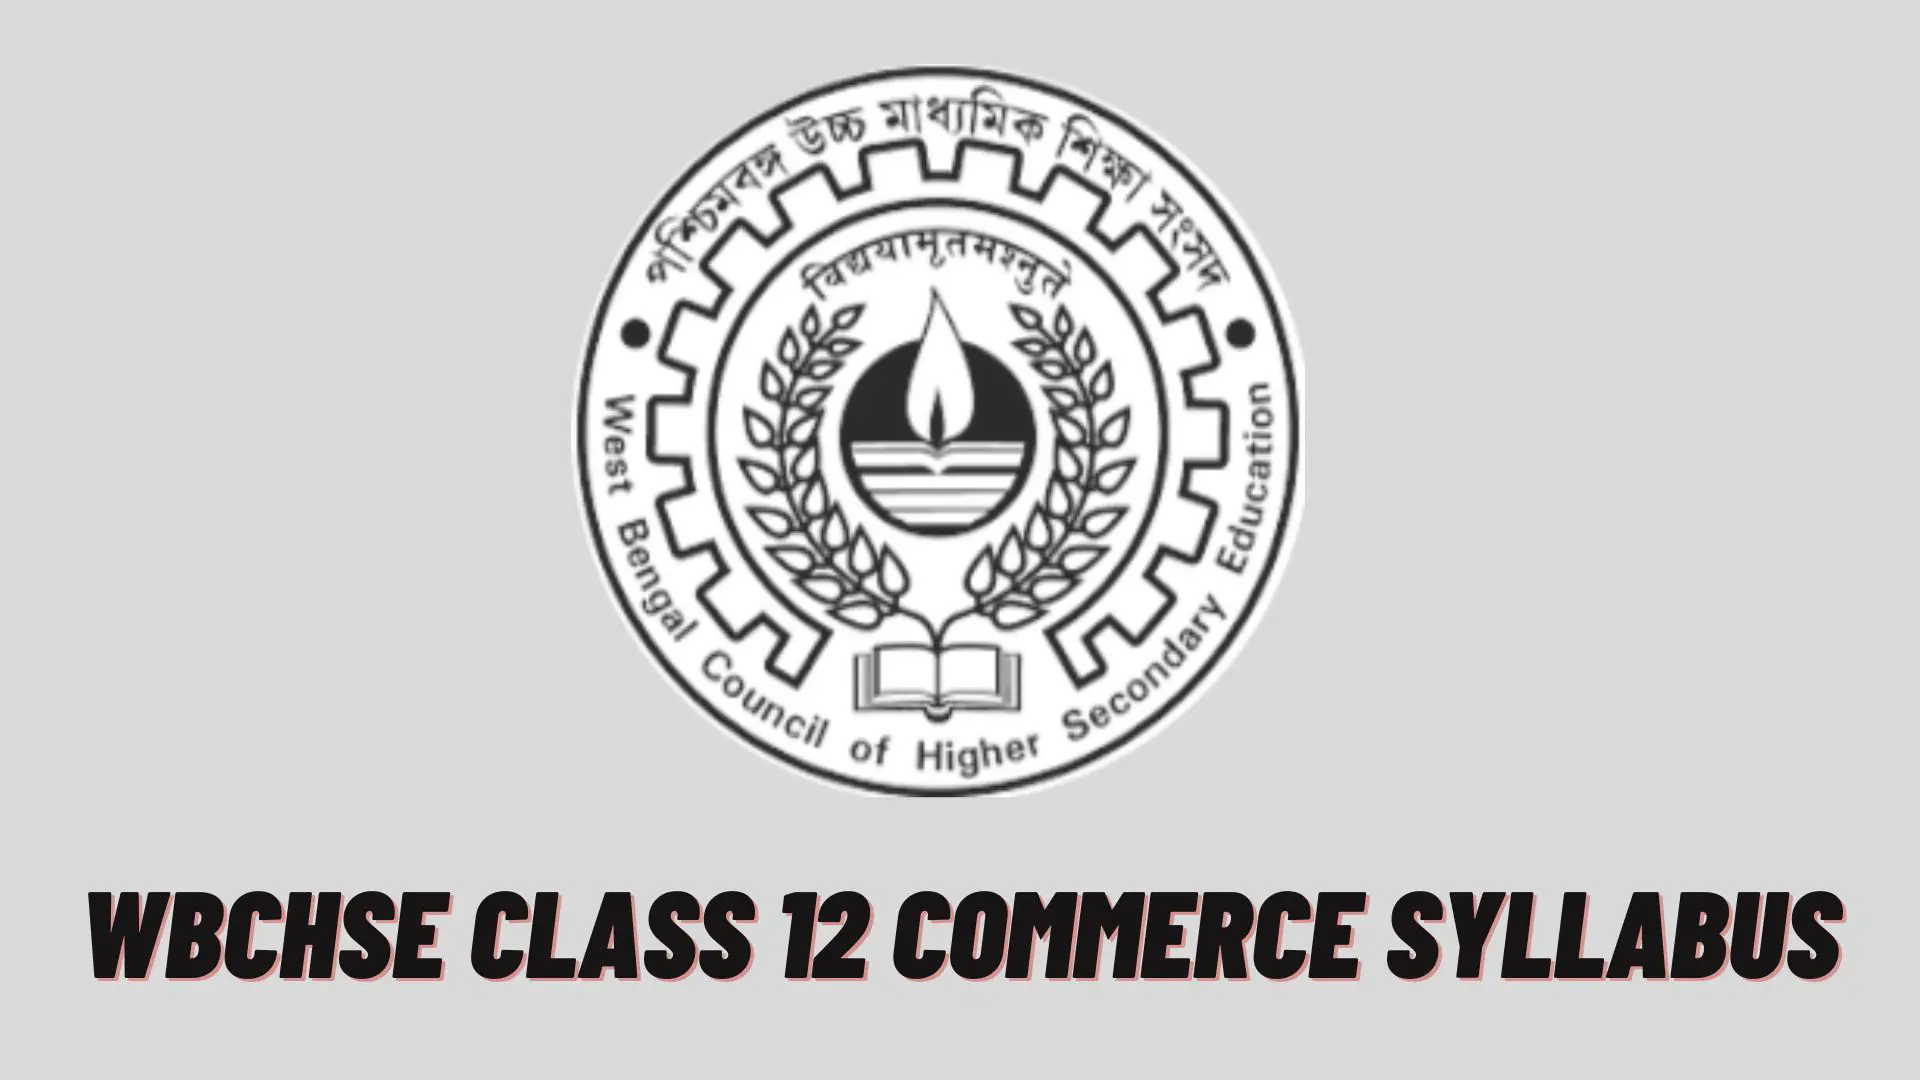 WBCHSE Class 12 Commerce Syllabus